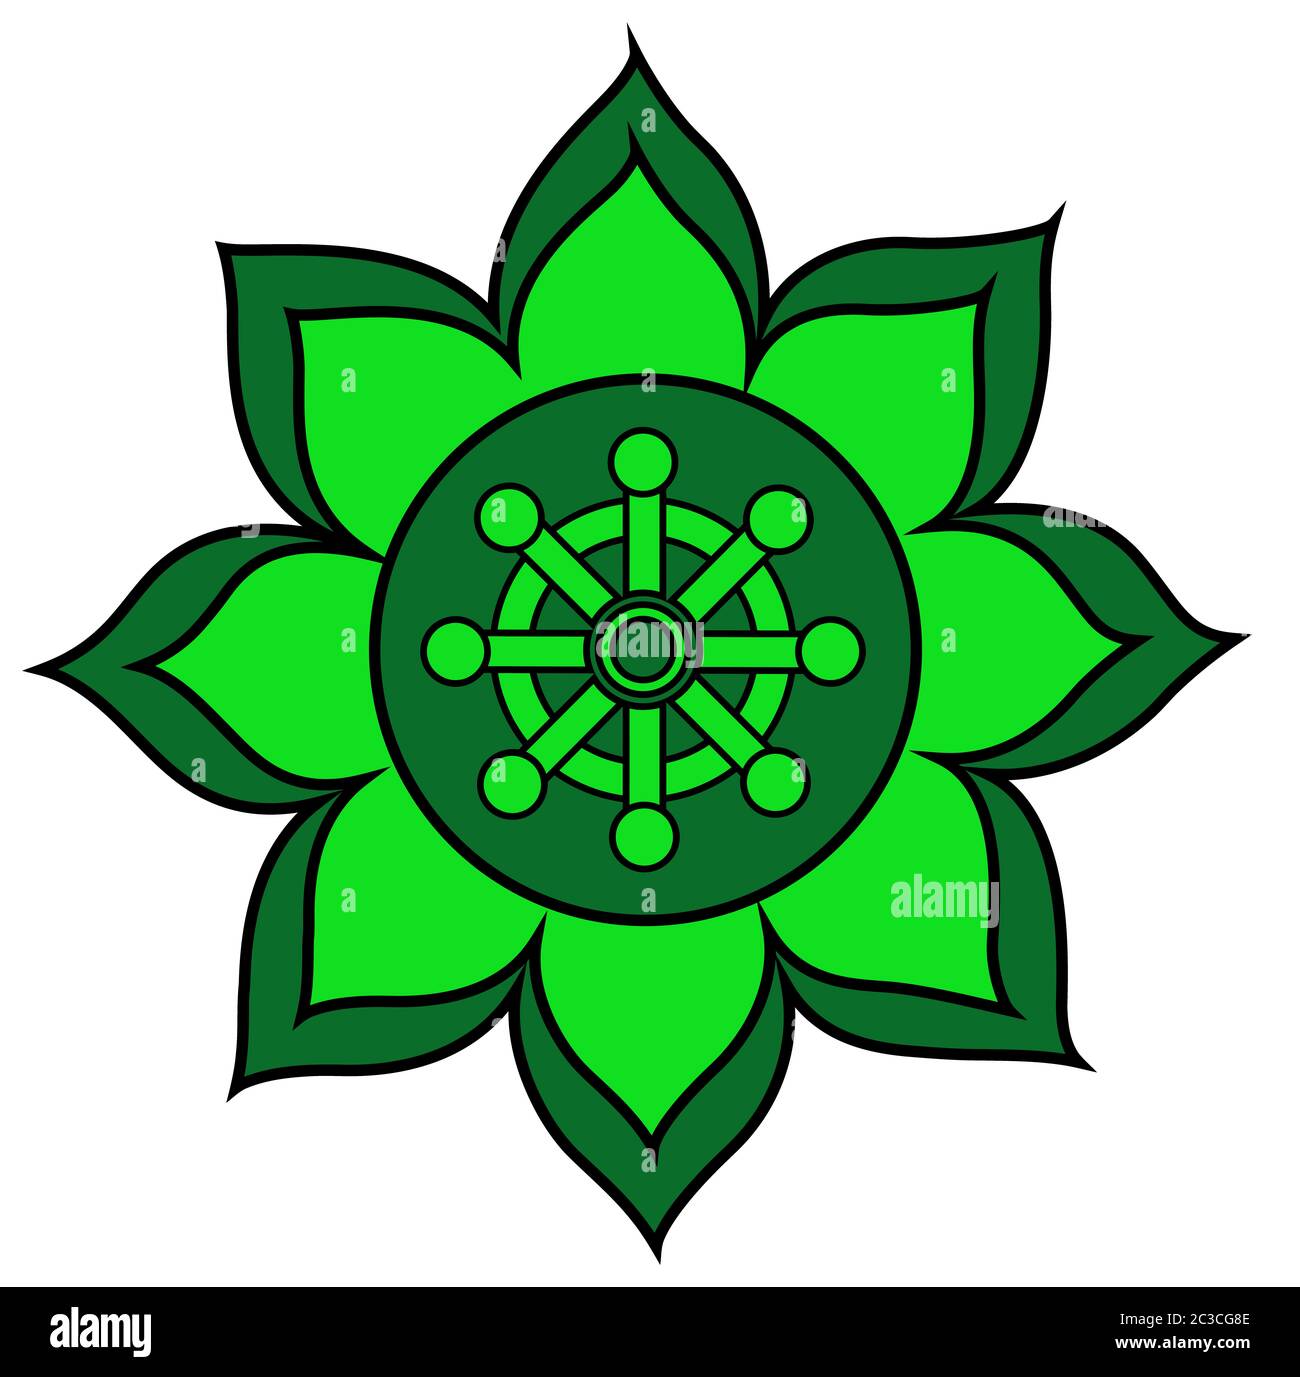 chakra buddhism wheel of dharma green illustration flower Stock Photo